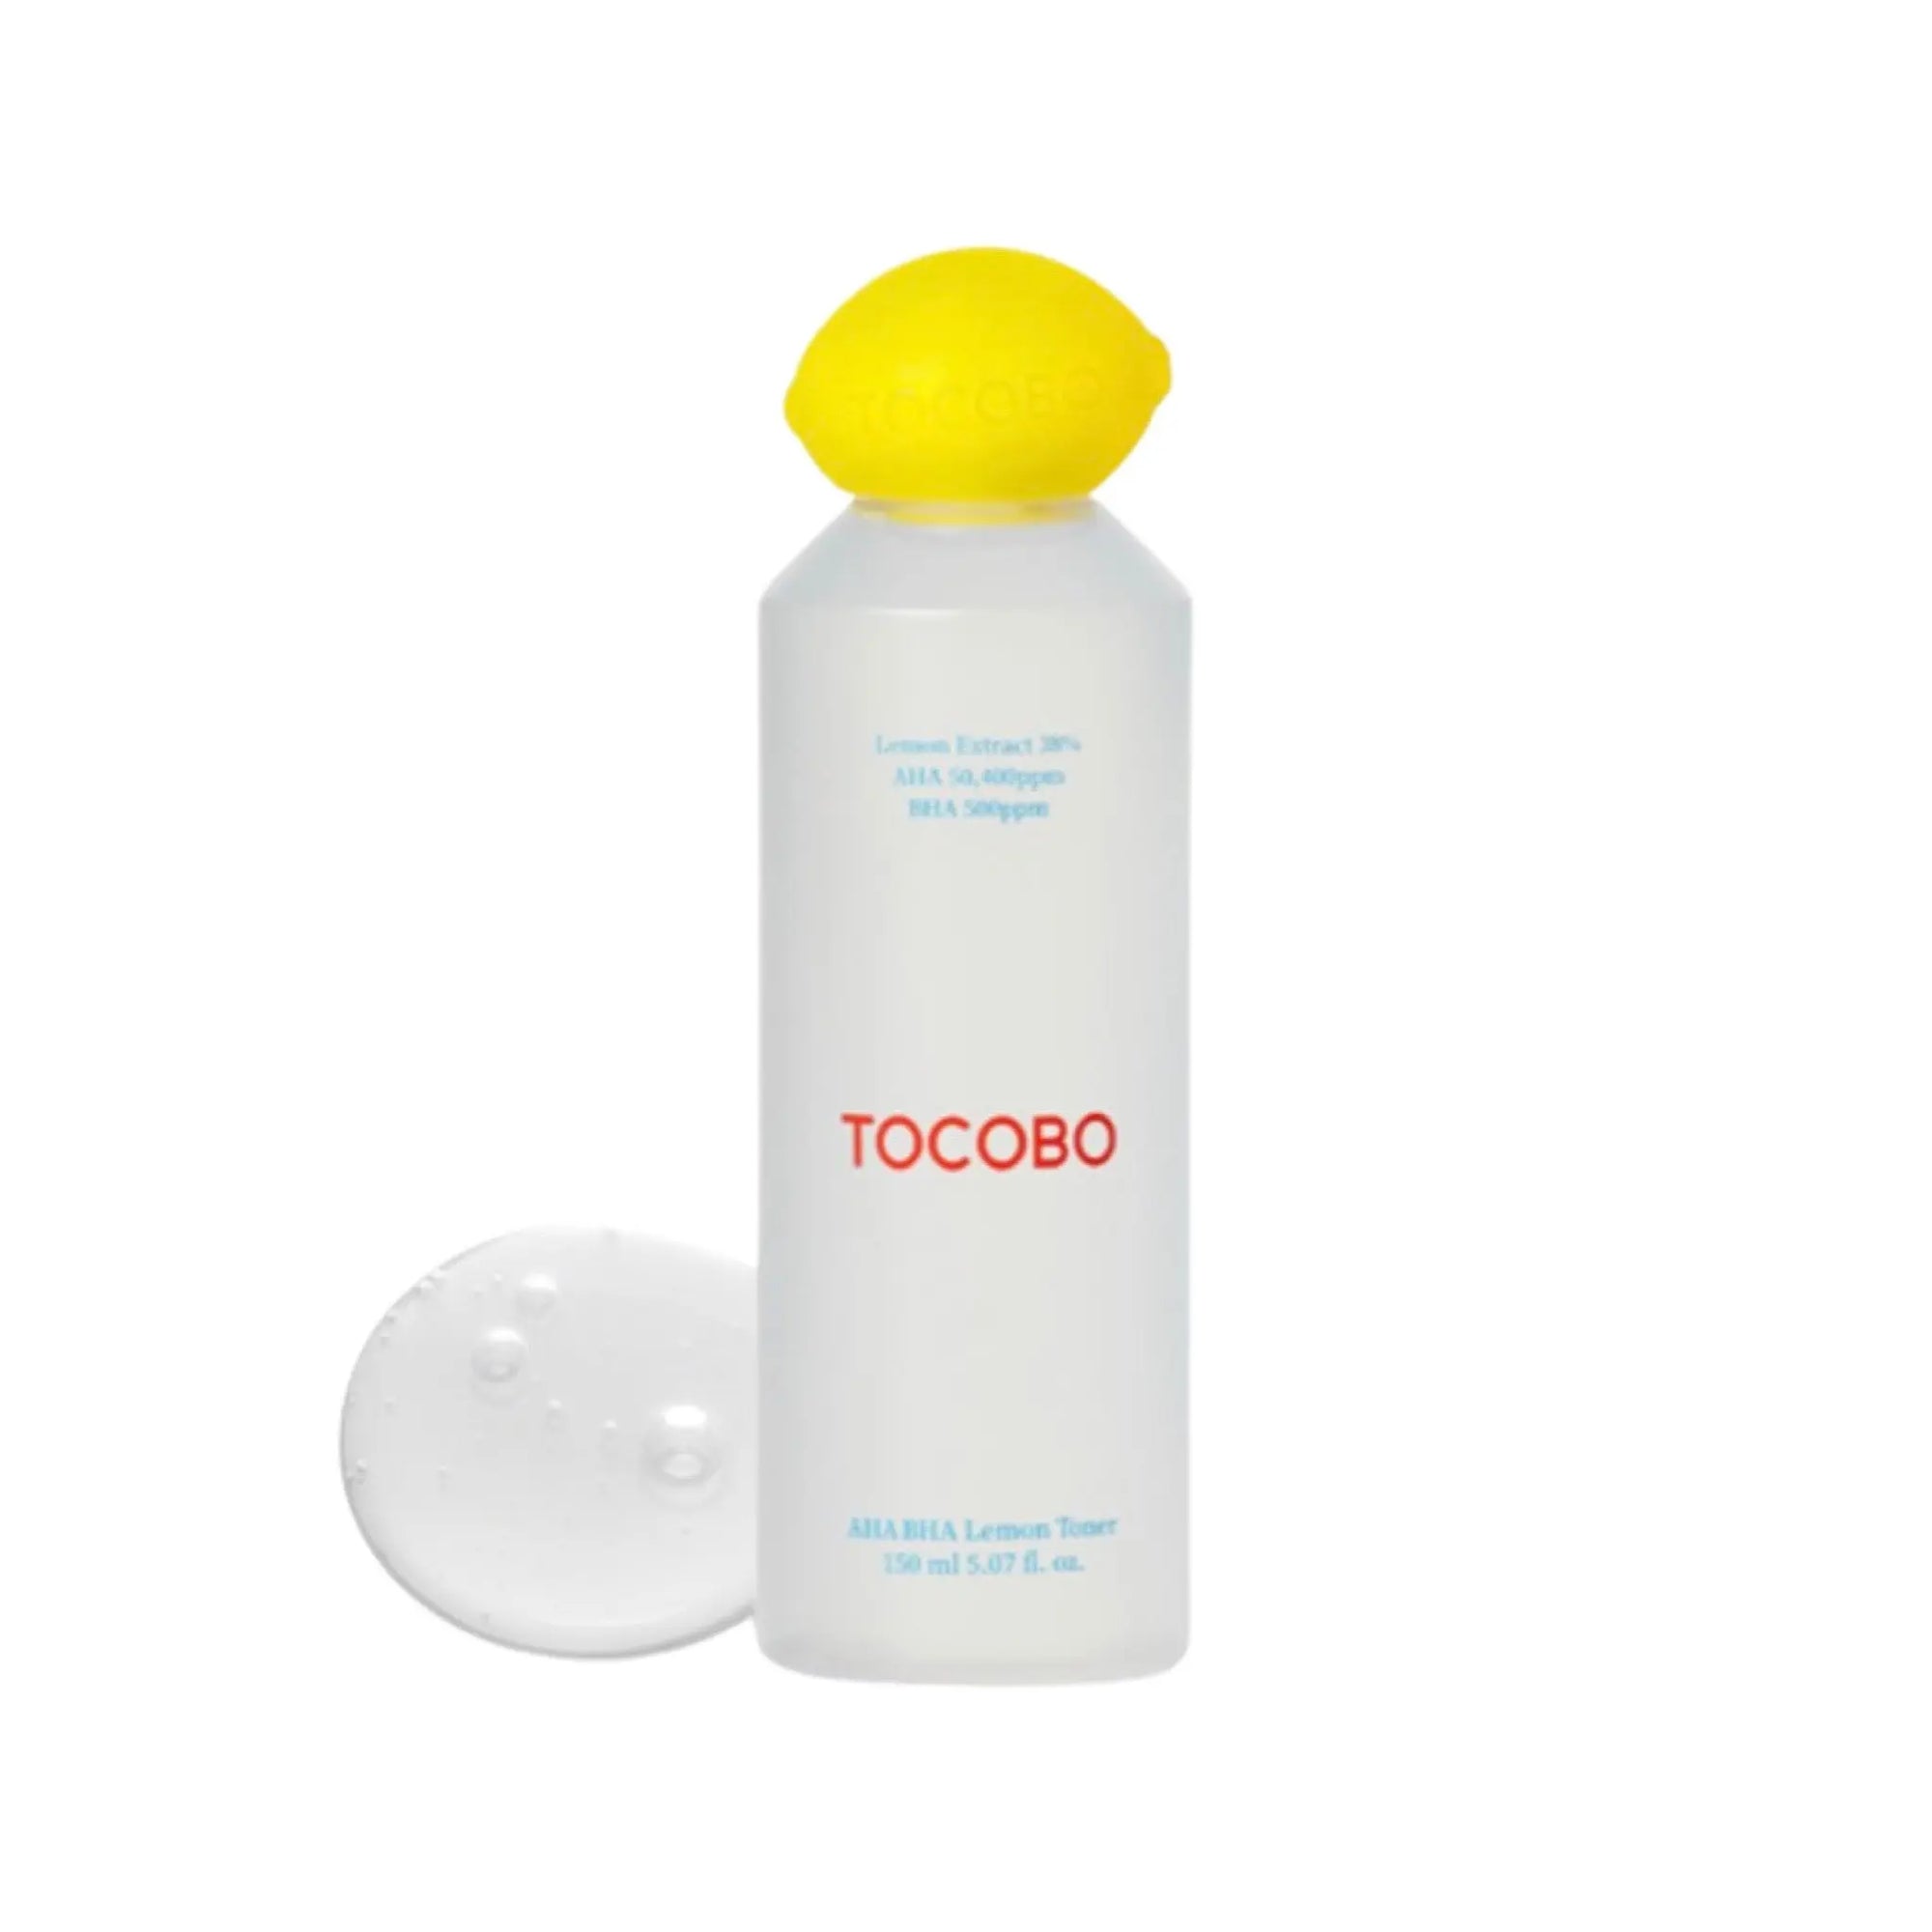 Tocobo - AHA BHA Lemon Toner 150mL Tocobo